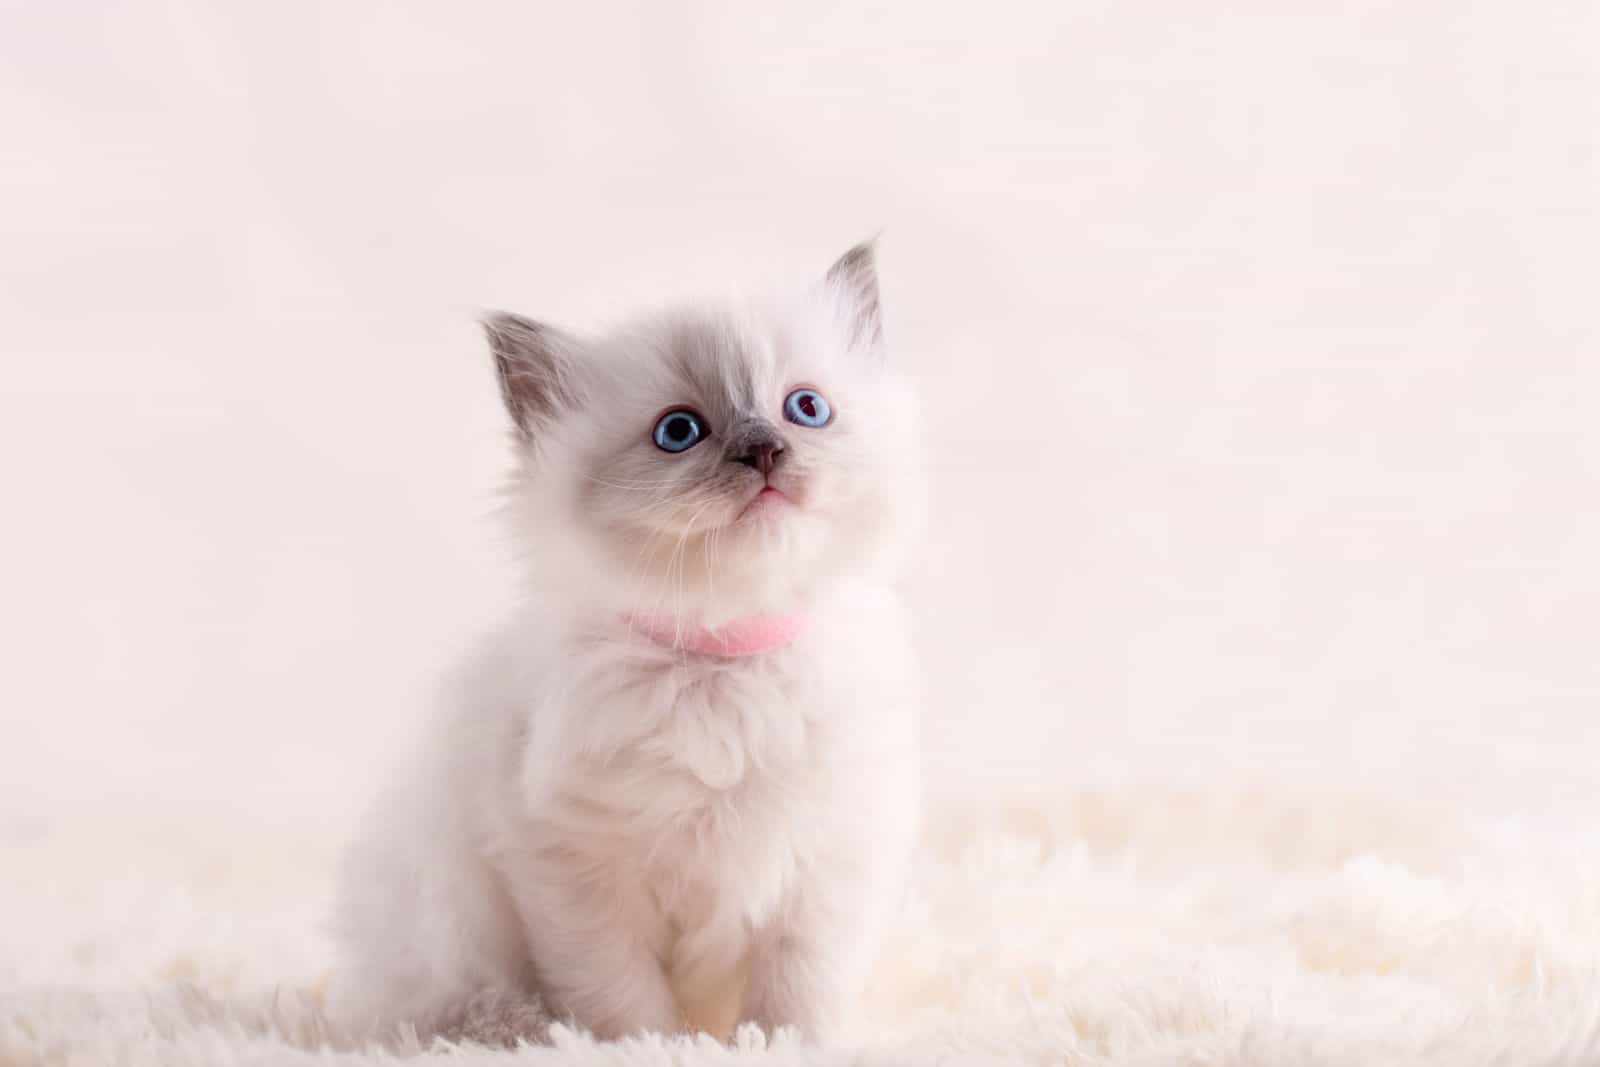 little ragdoll kitten with blue eyes in pink collar sitting on a beige background